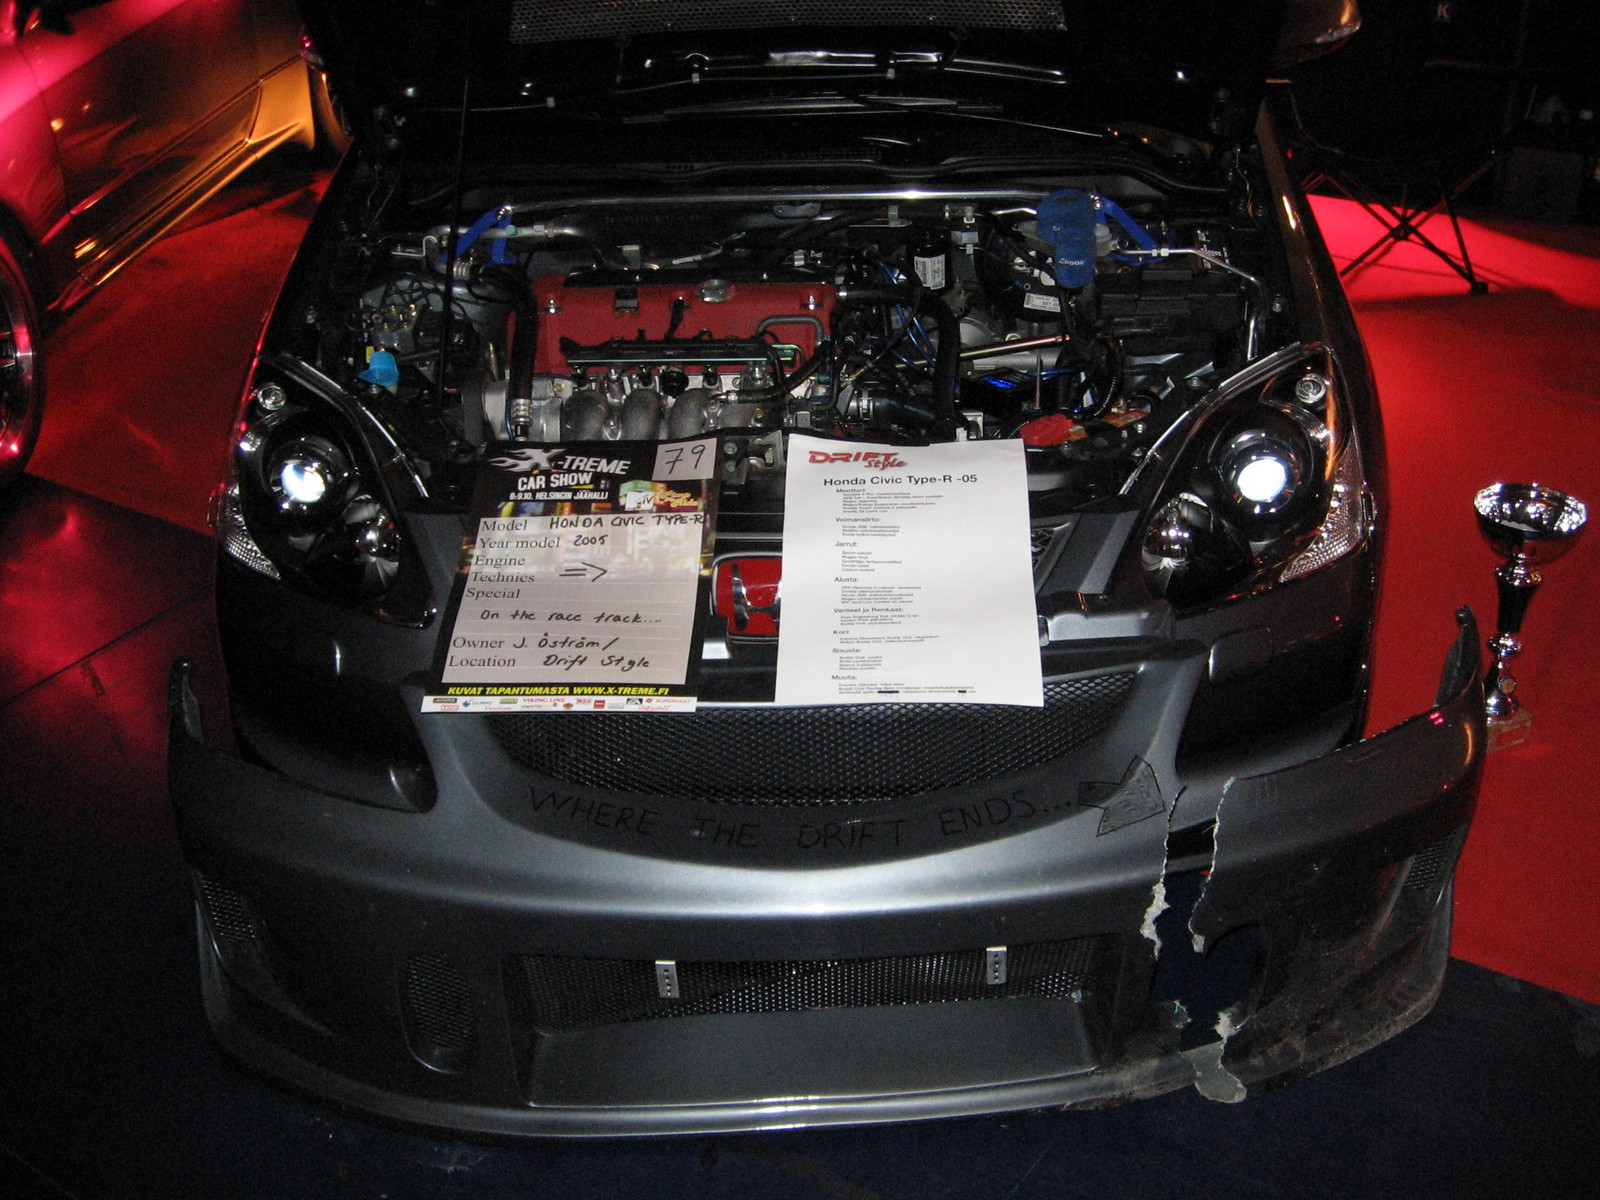 X-treme Car Show 9.10.2005, Honda Civic Type-R -05 moottori